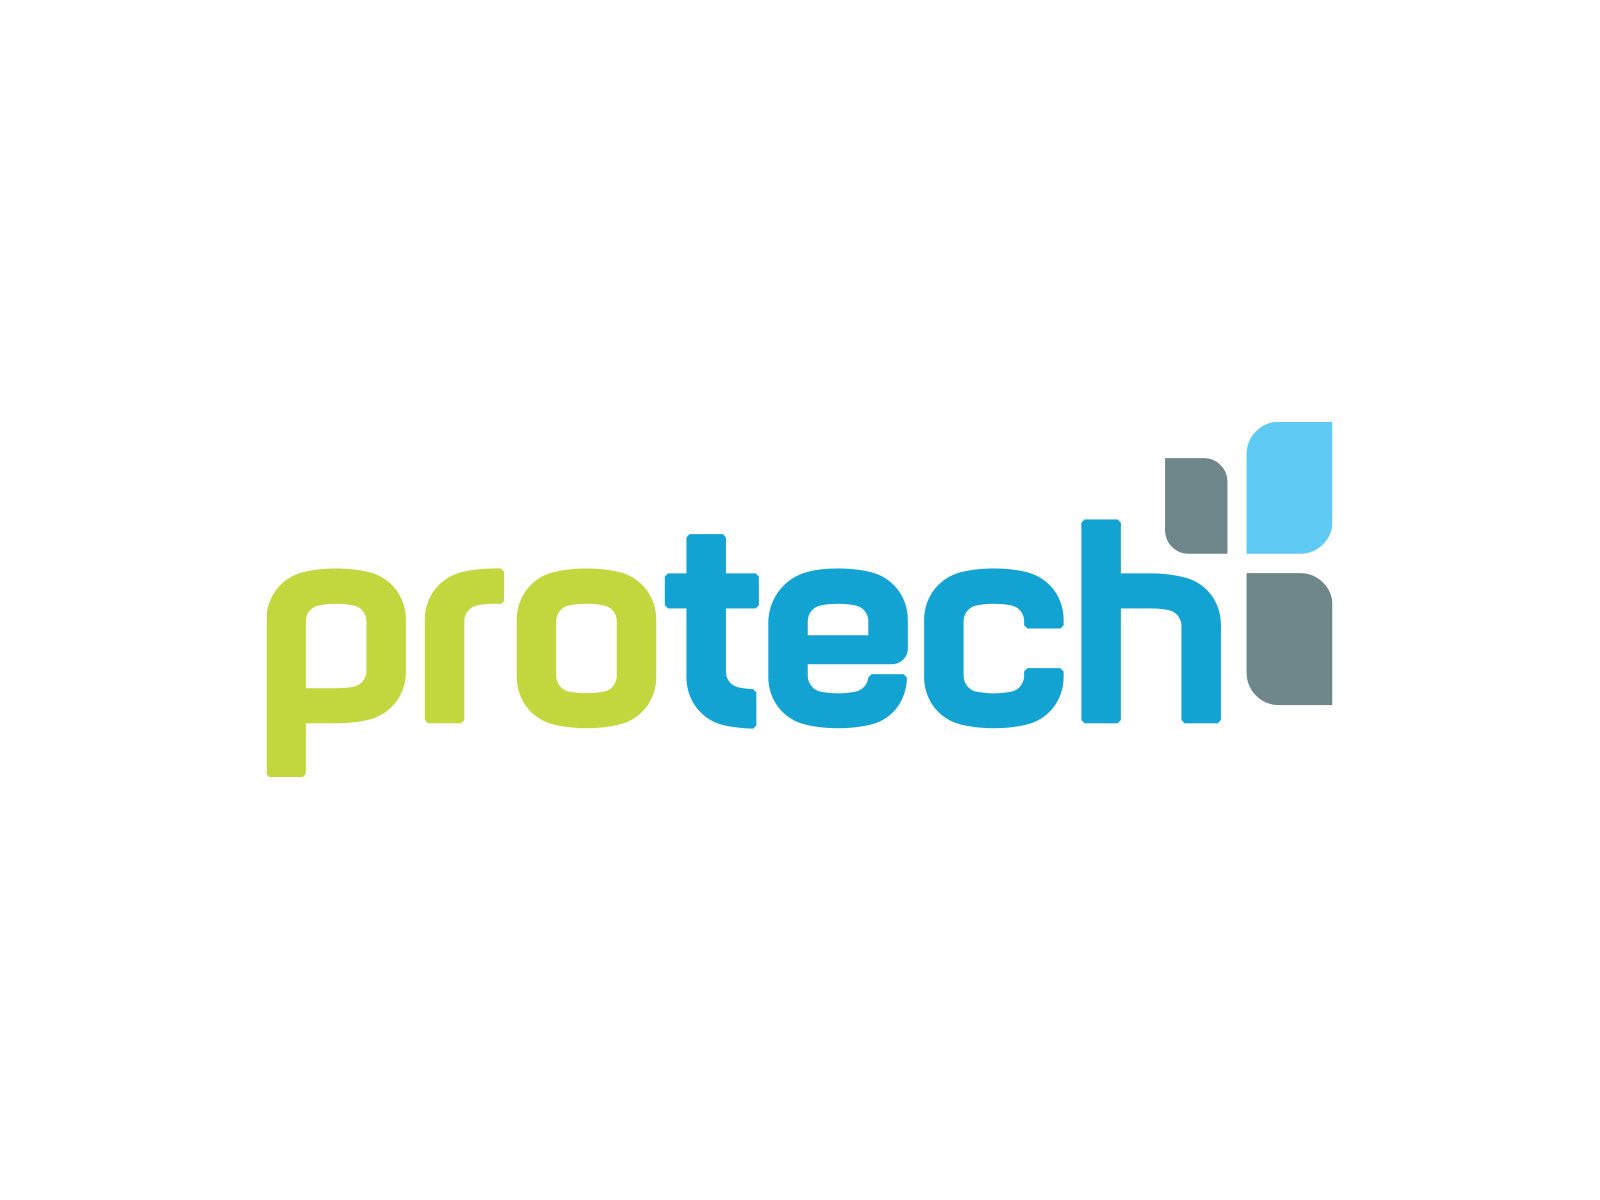 Protech Identity - Nuforms Design